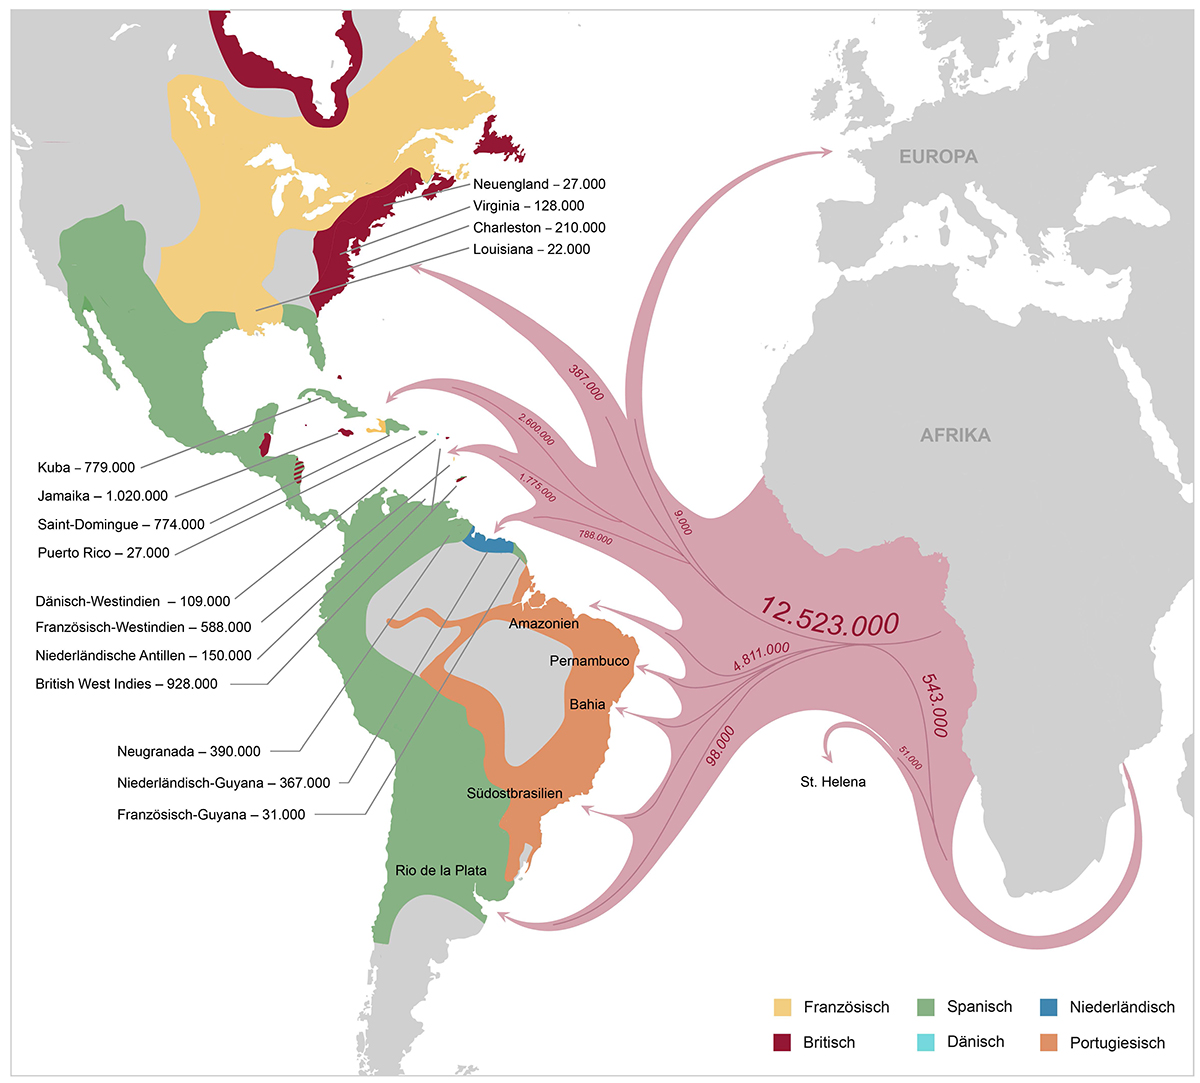 Transatlantischer Sklavenhandel 1501–1866 - Umfang und Ziele sowie koloniale Herrschaftsgebiete in Amerika um 1750